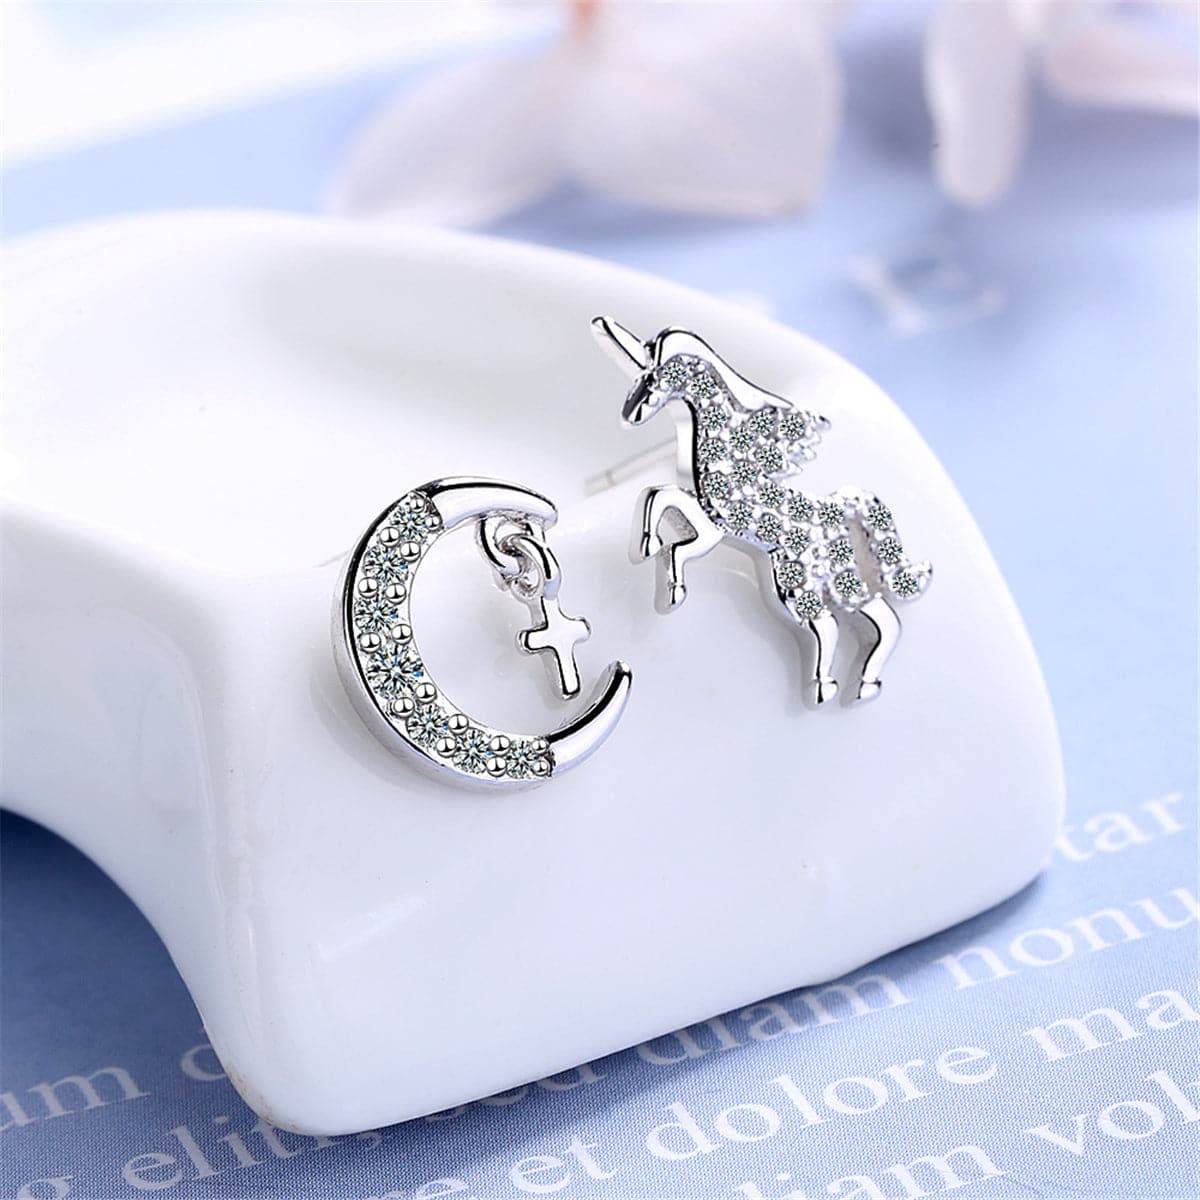 Cubic Zirconia & Silver-Plated Moon & Unicorn Stud Earrings